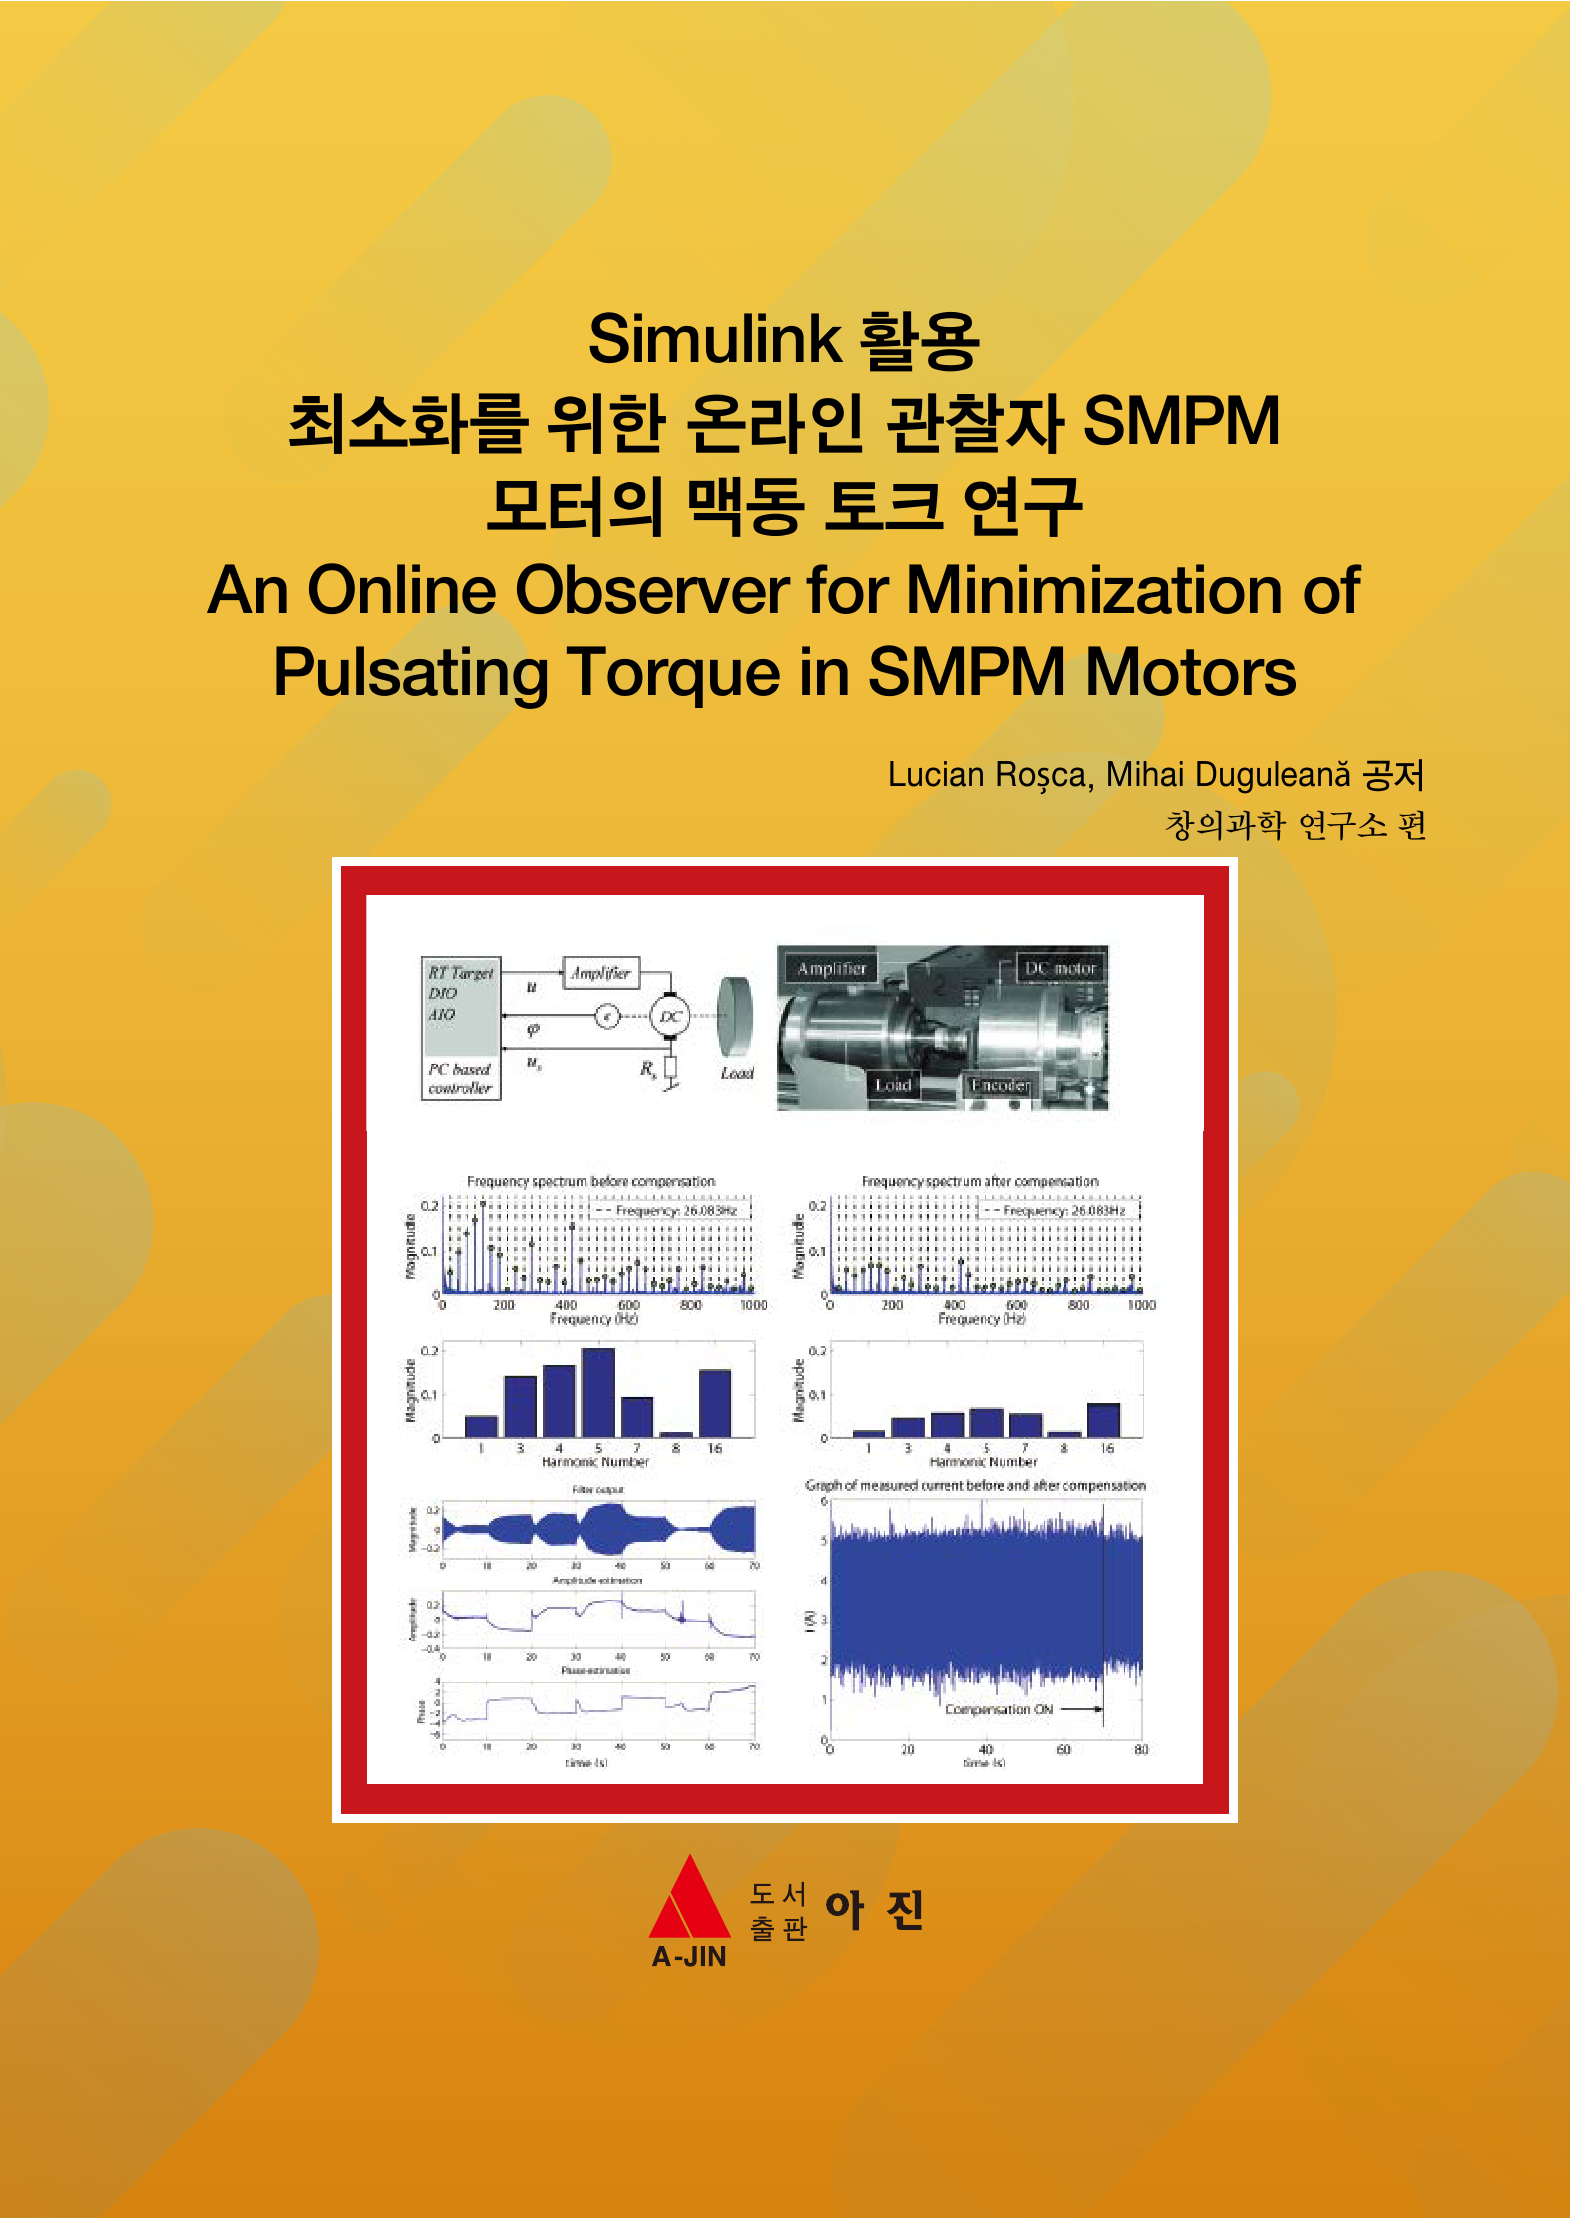 Simulink 활용 최소화를 위한 온라인 관찰자 SMPM 모터의 맥동 토크 연구(An Online Observer for Minimization of Pulsating Torque in SMPM Motors)